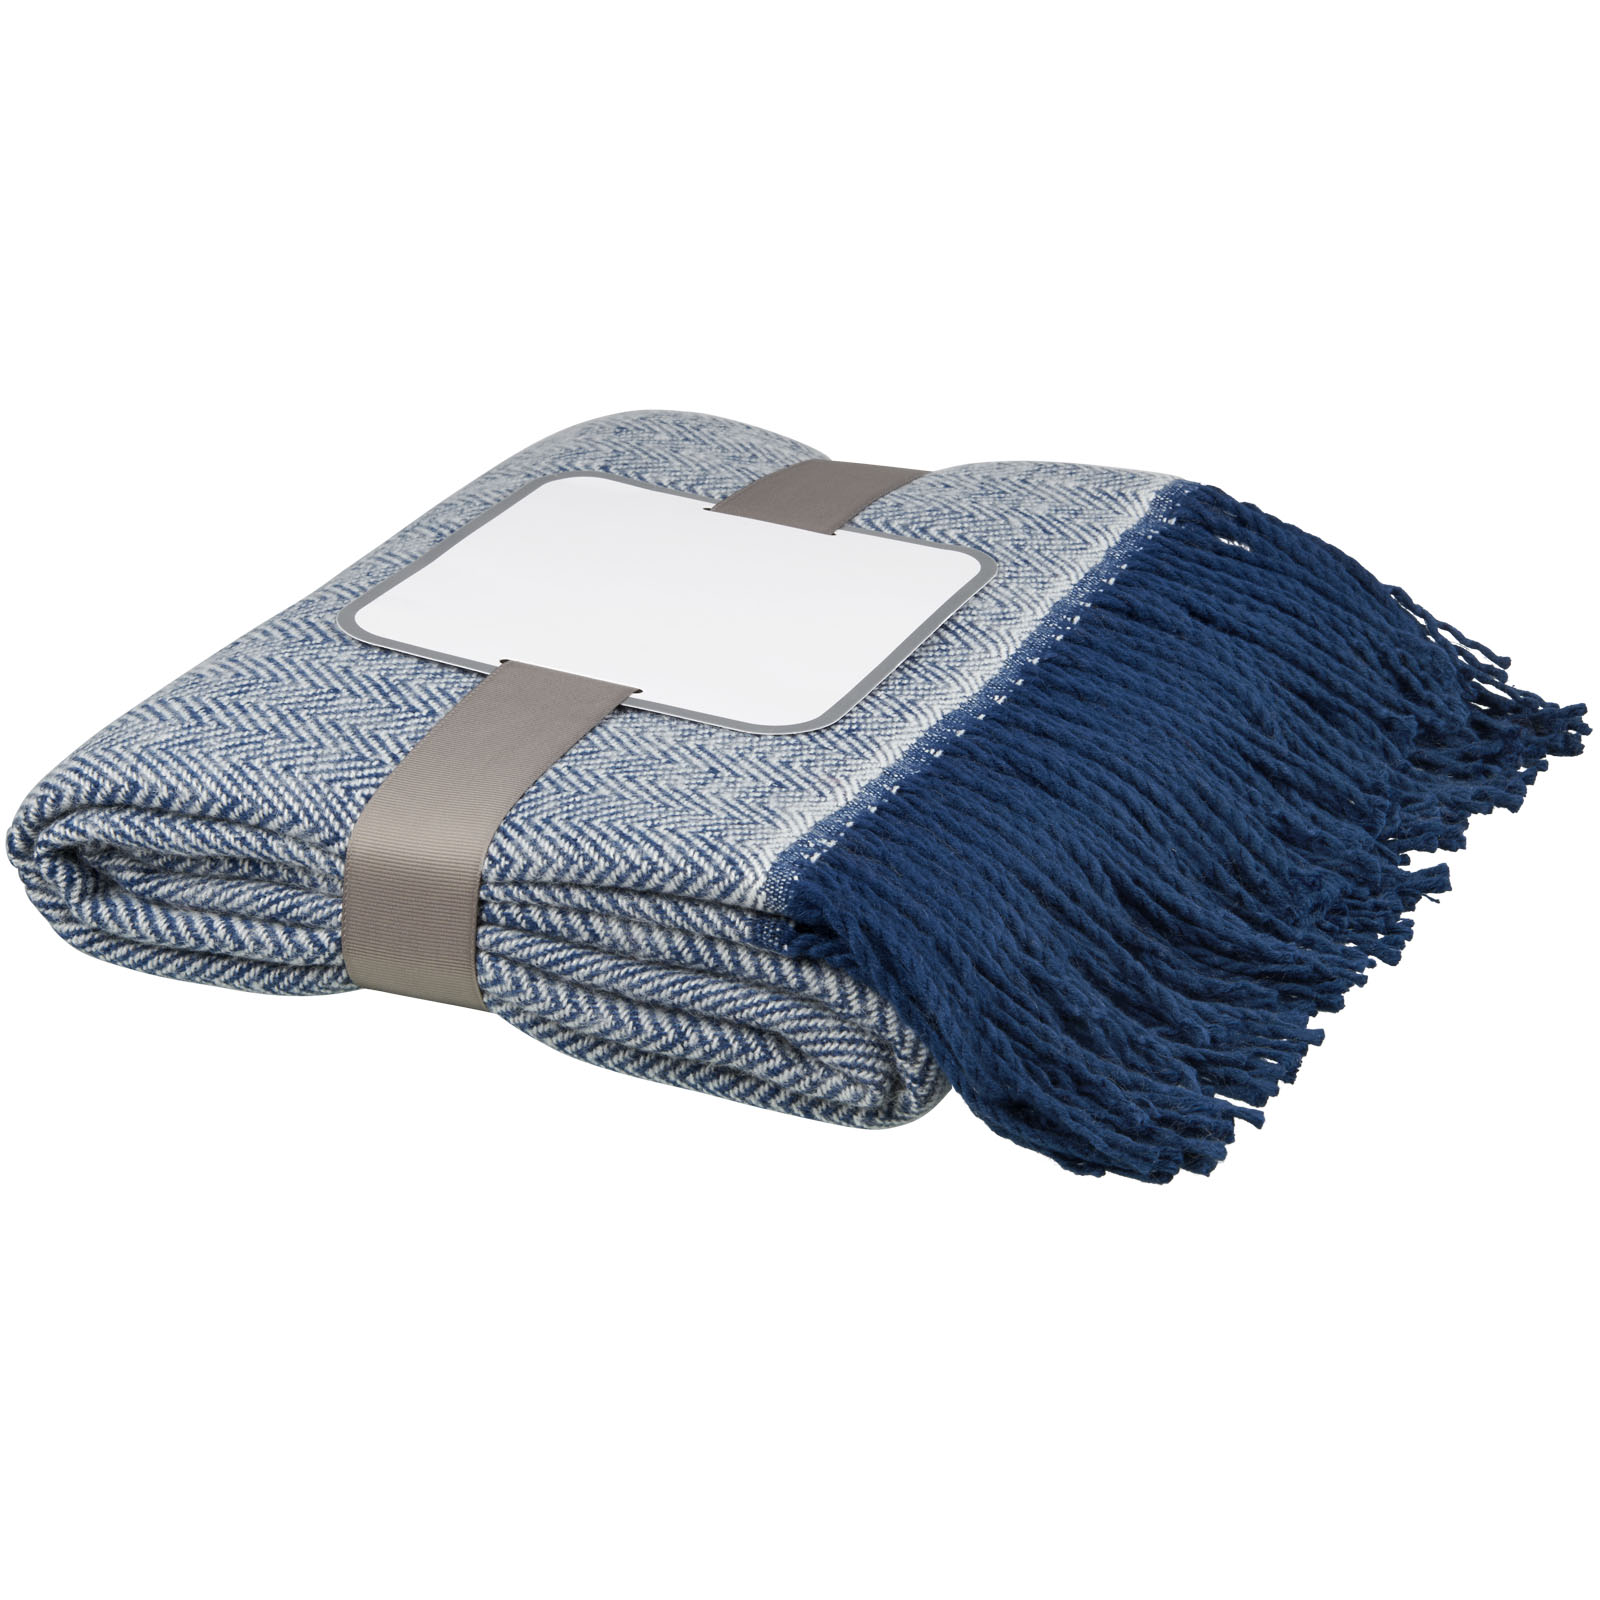 Throw blanket with a herringbone pattern - Southam